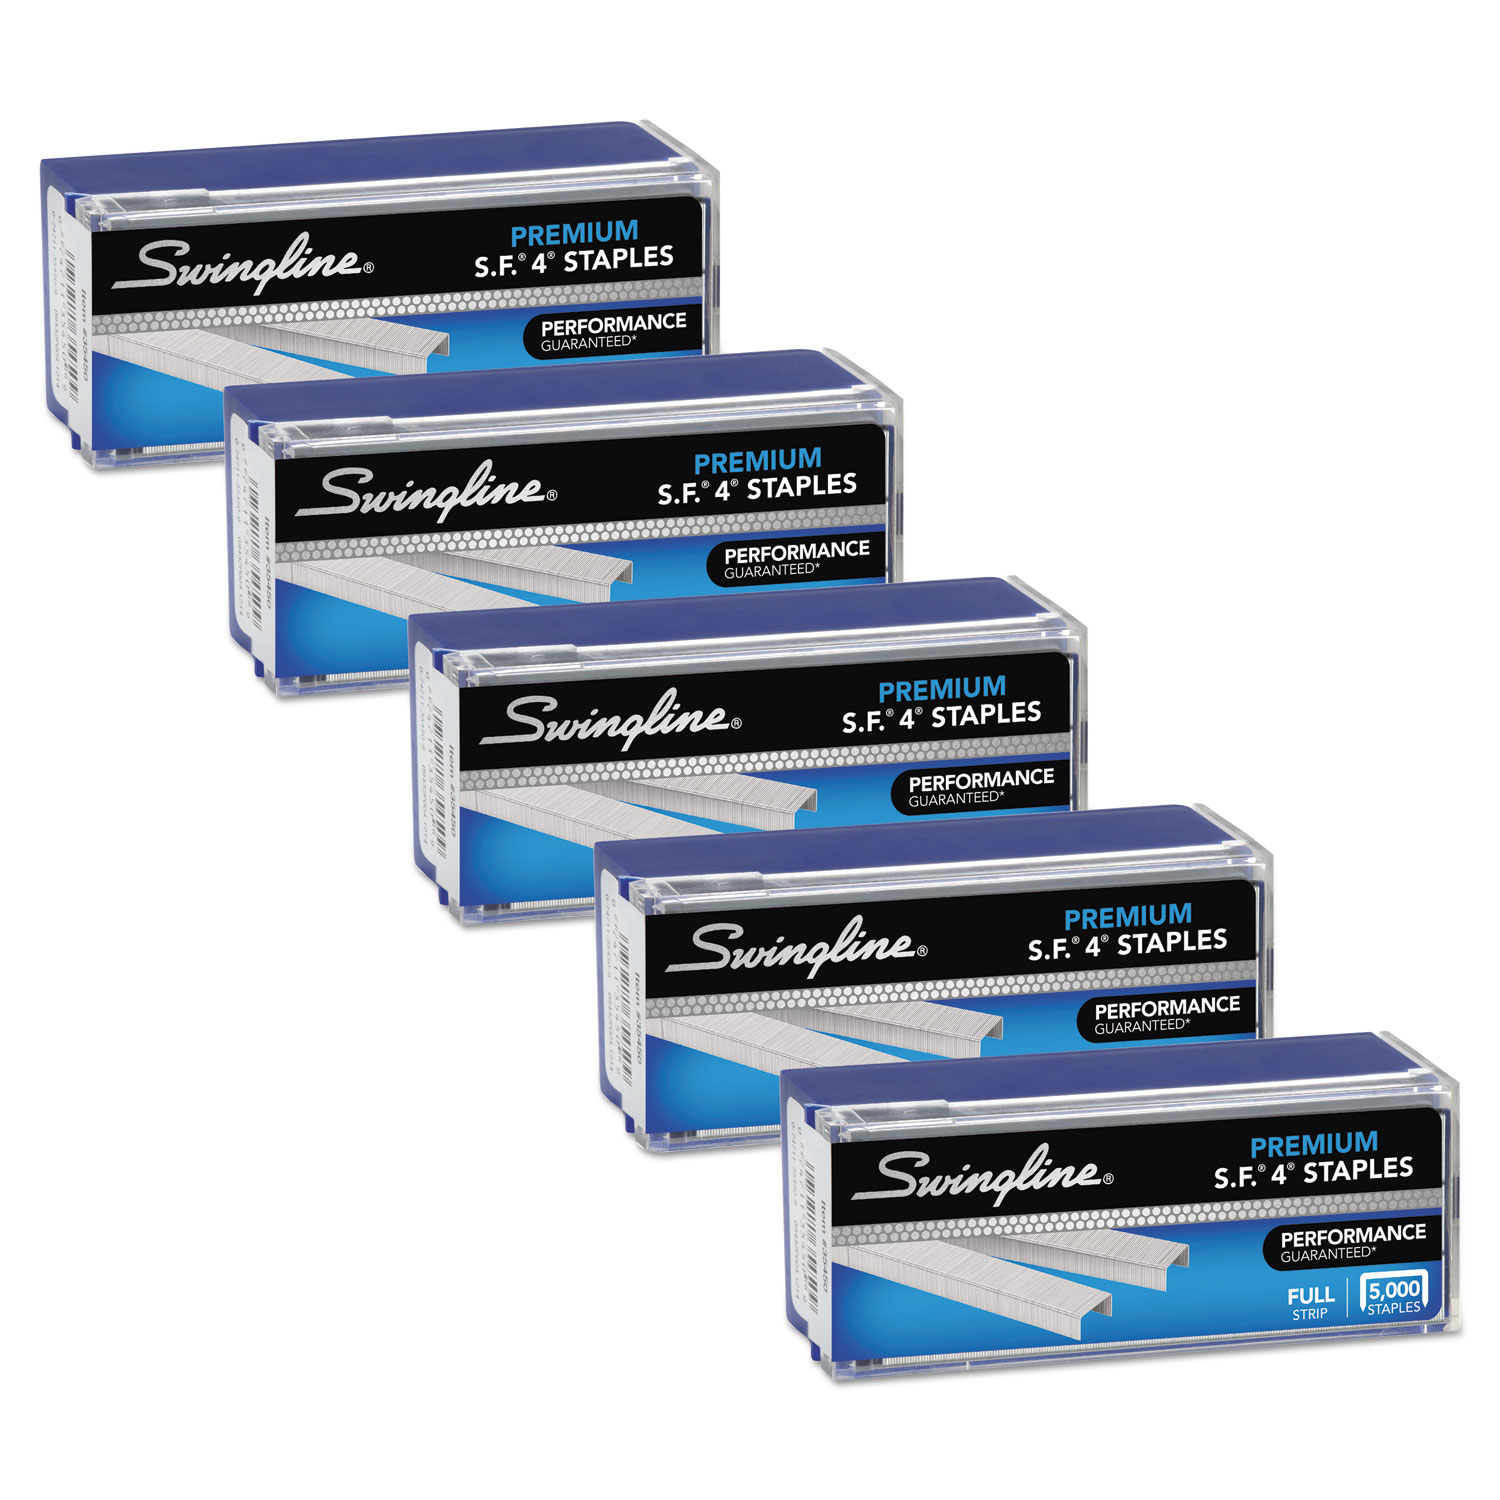  Swingline S7035481 S.F. 4 Premium Staples, 0.25 Leg, 0.5 Crown, Silver, 5,000/Box, 5 Boxes/Pack (SWI35481) 